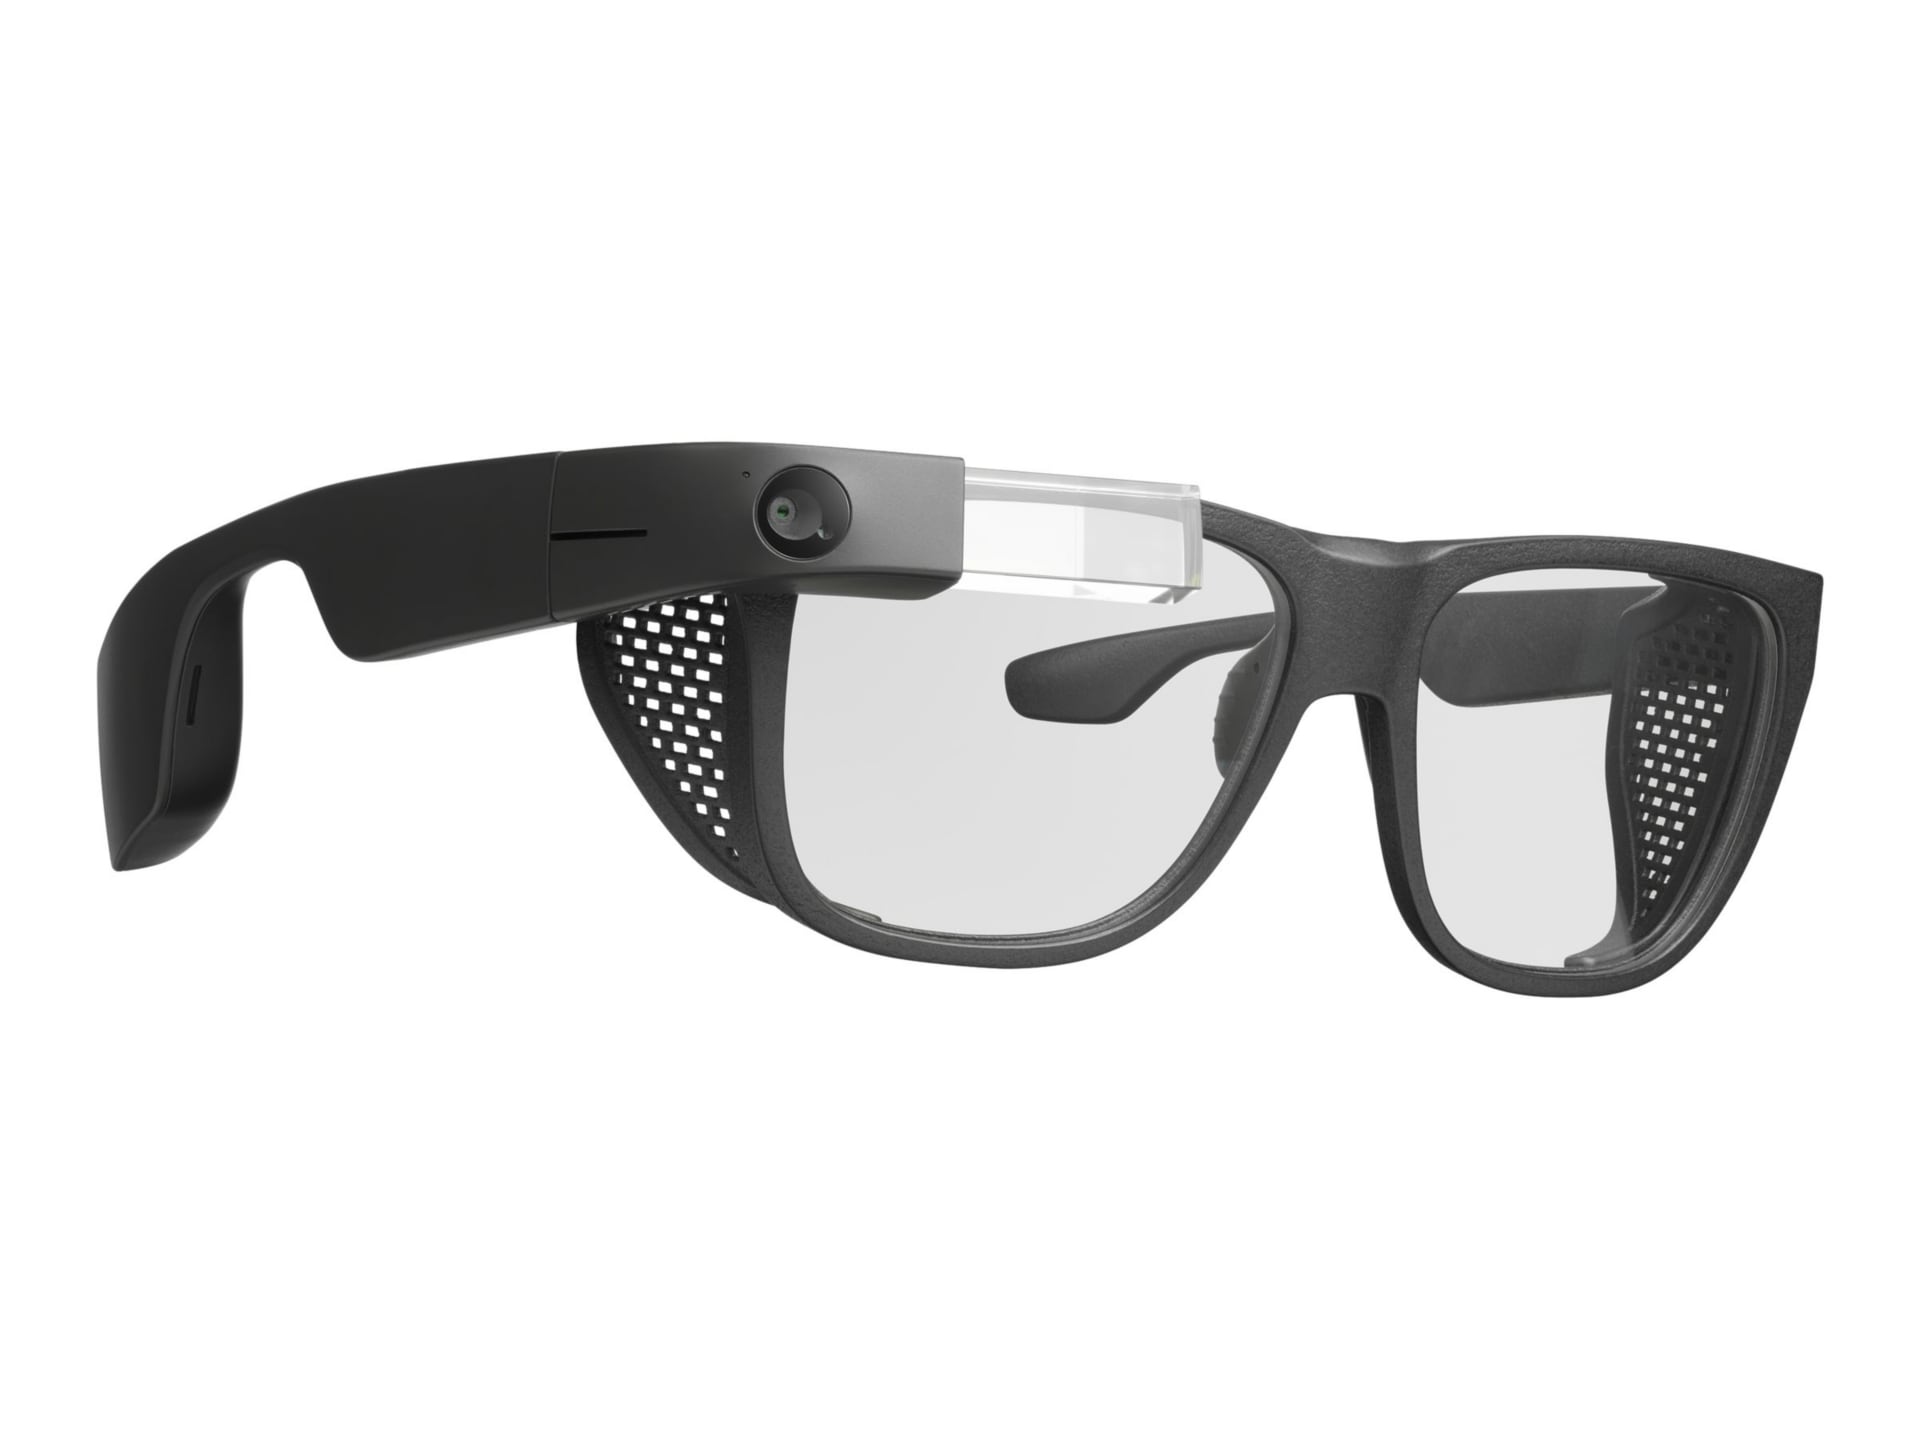 Google Glass Enterprise Edition 2 Development Kit smart glasses - 32 GB